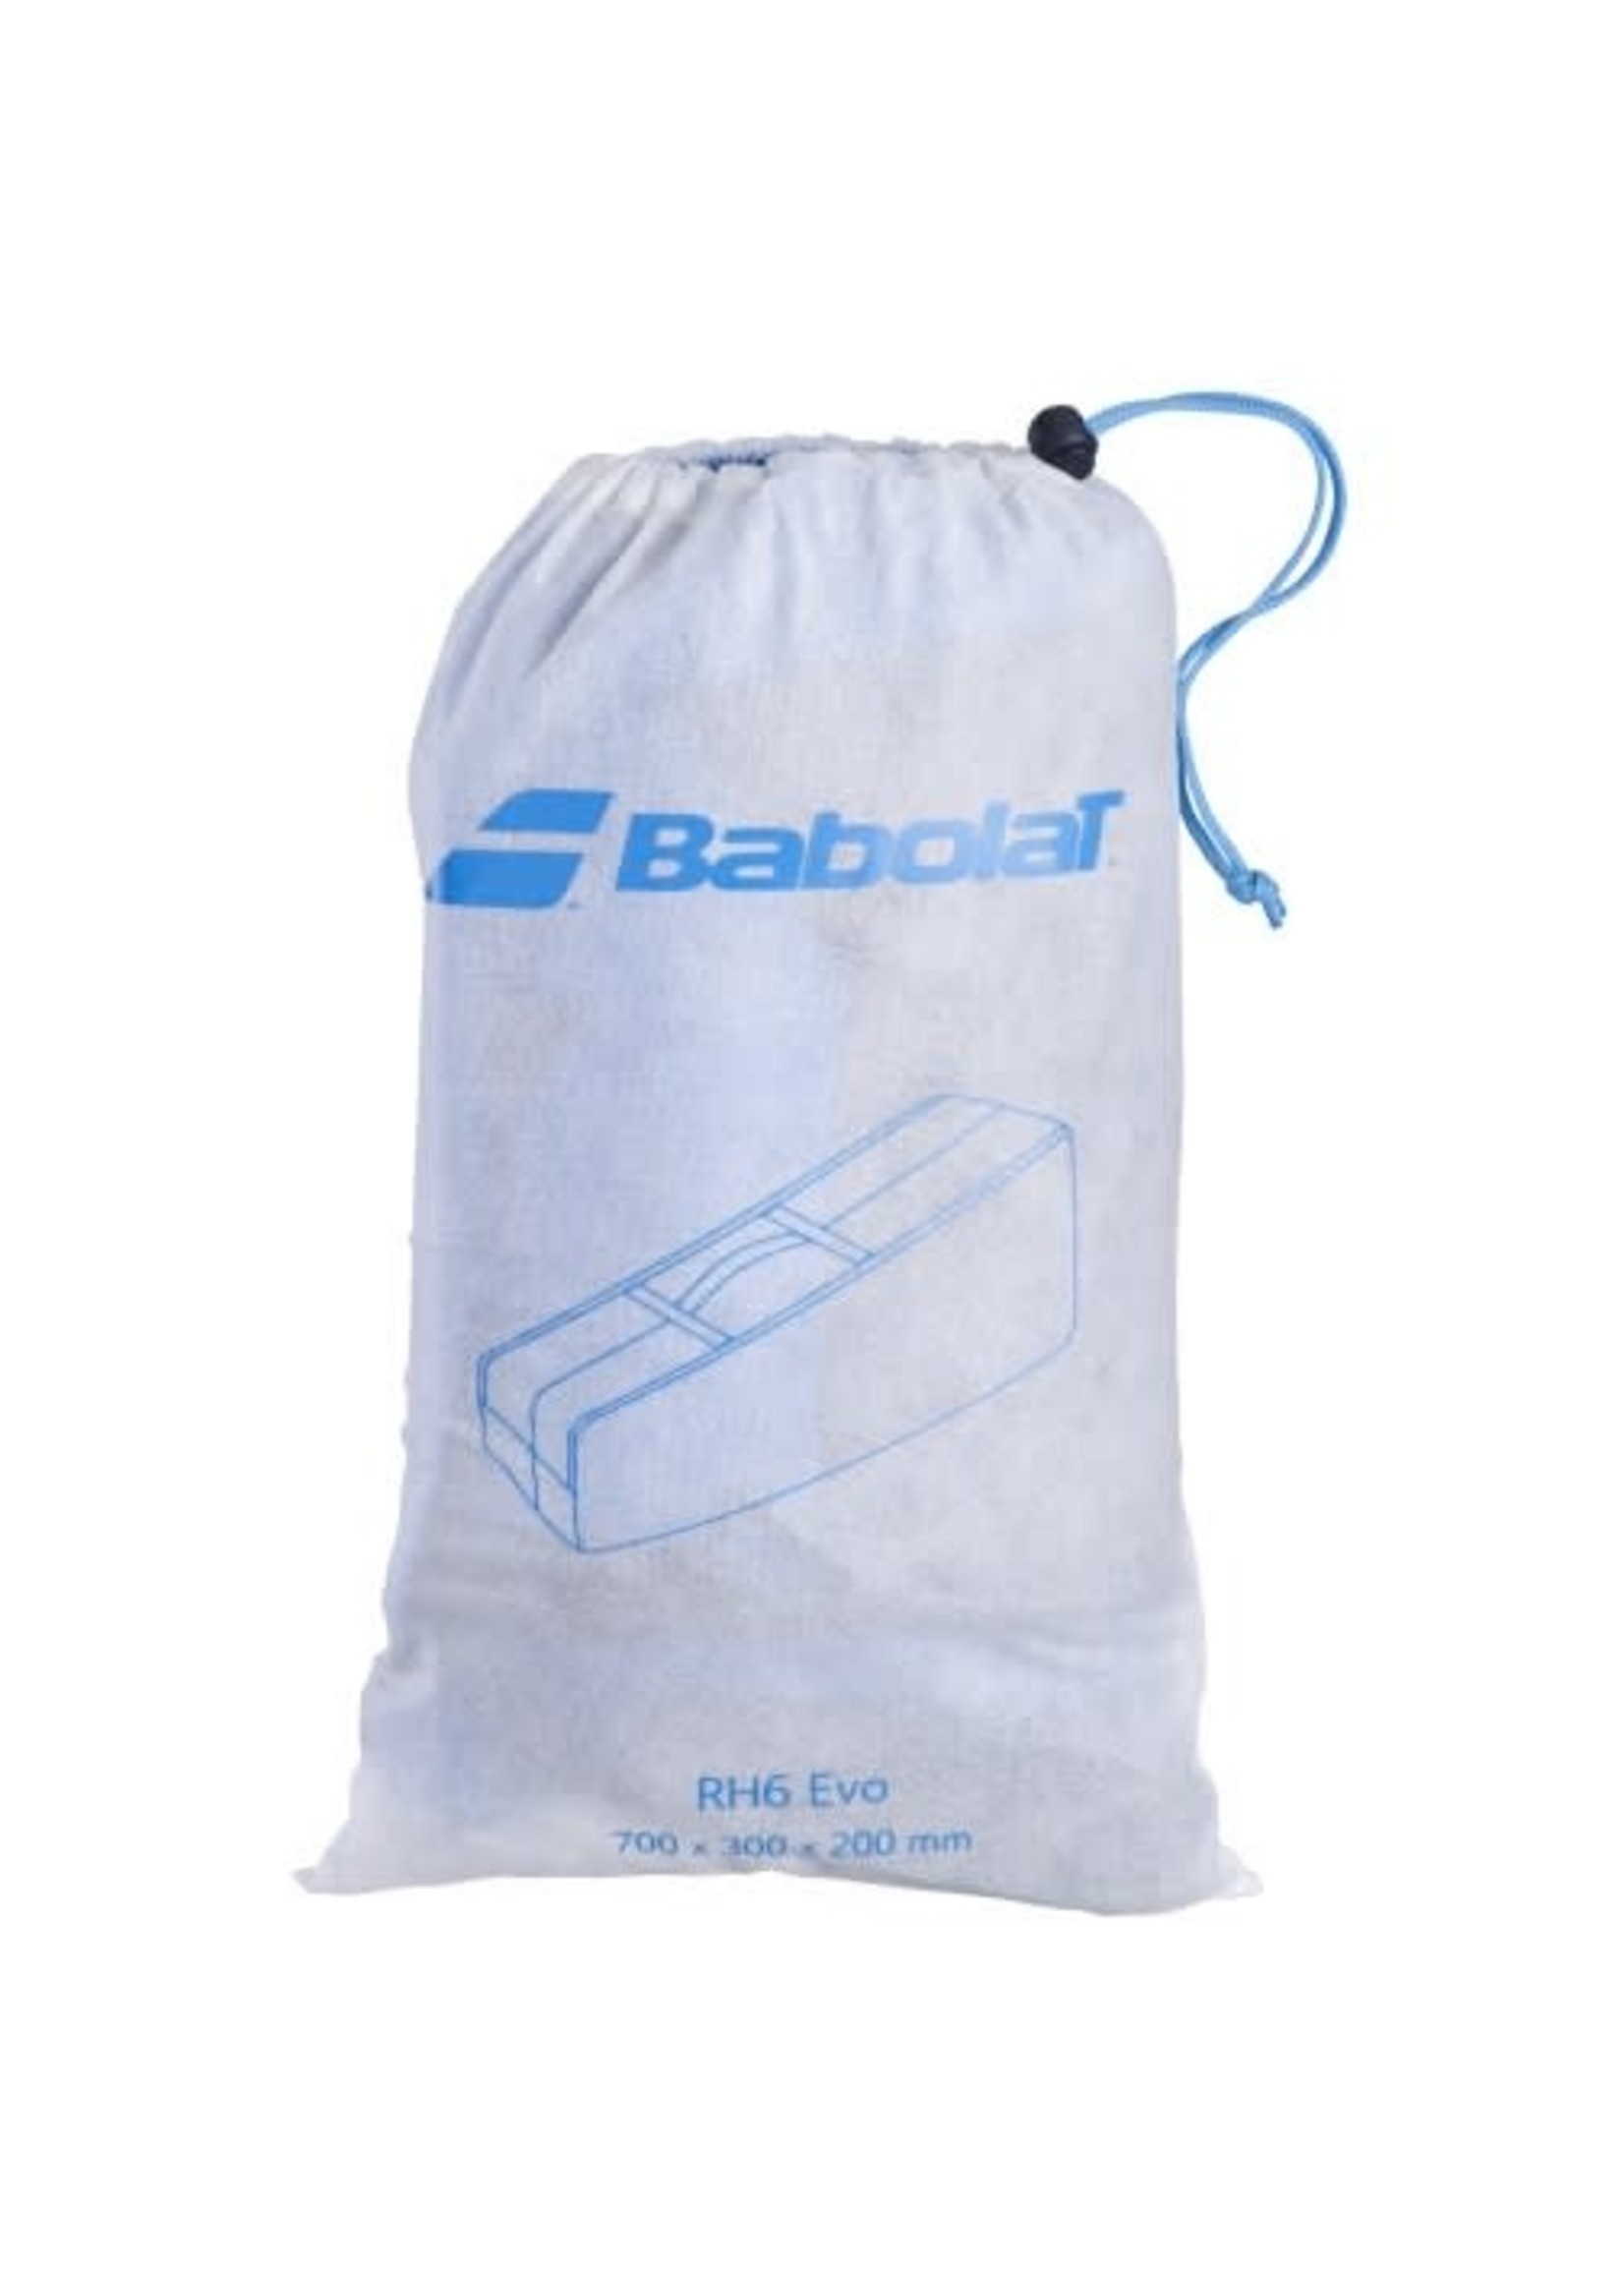 Babolat Babolat RH6 Evo Racket Bag (2022)